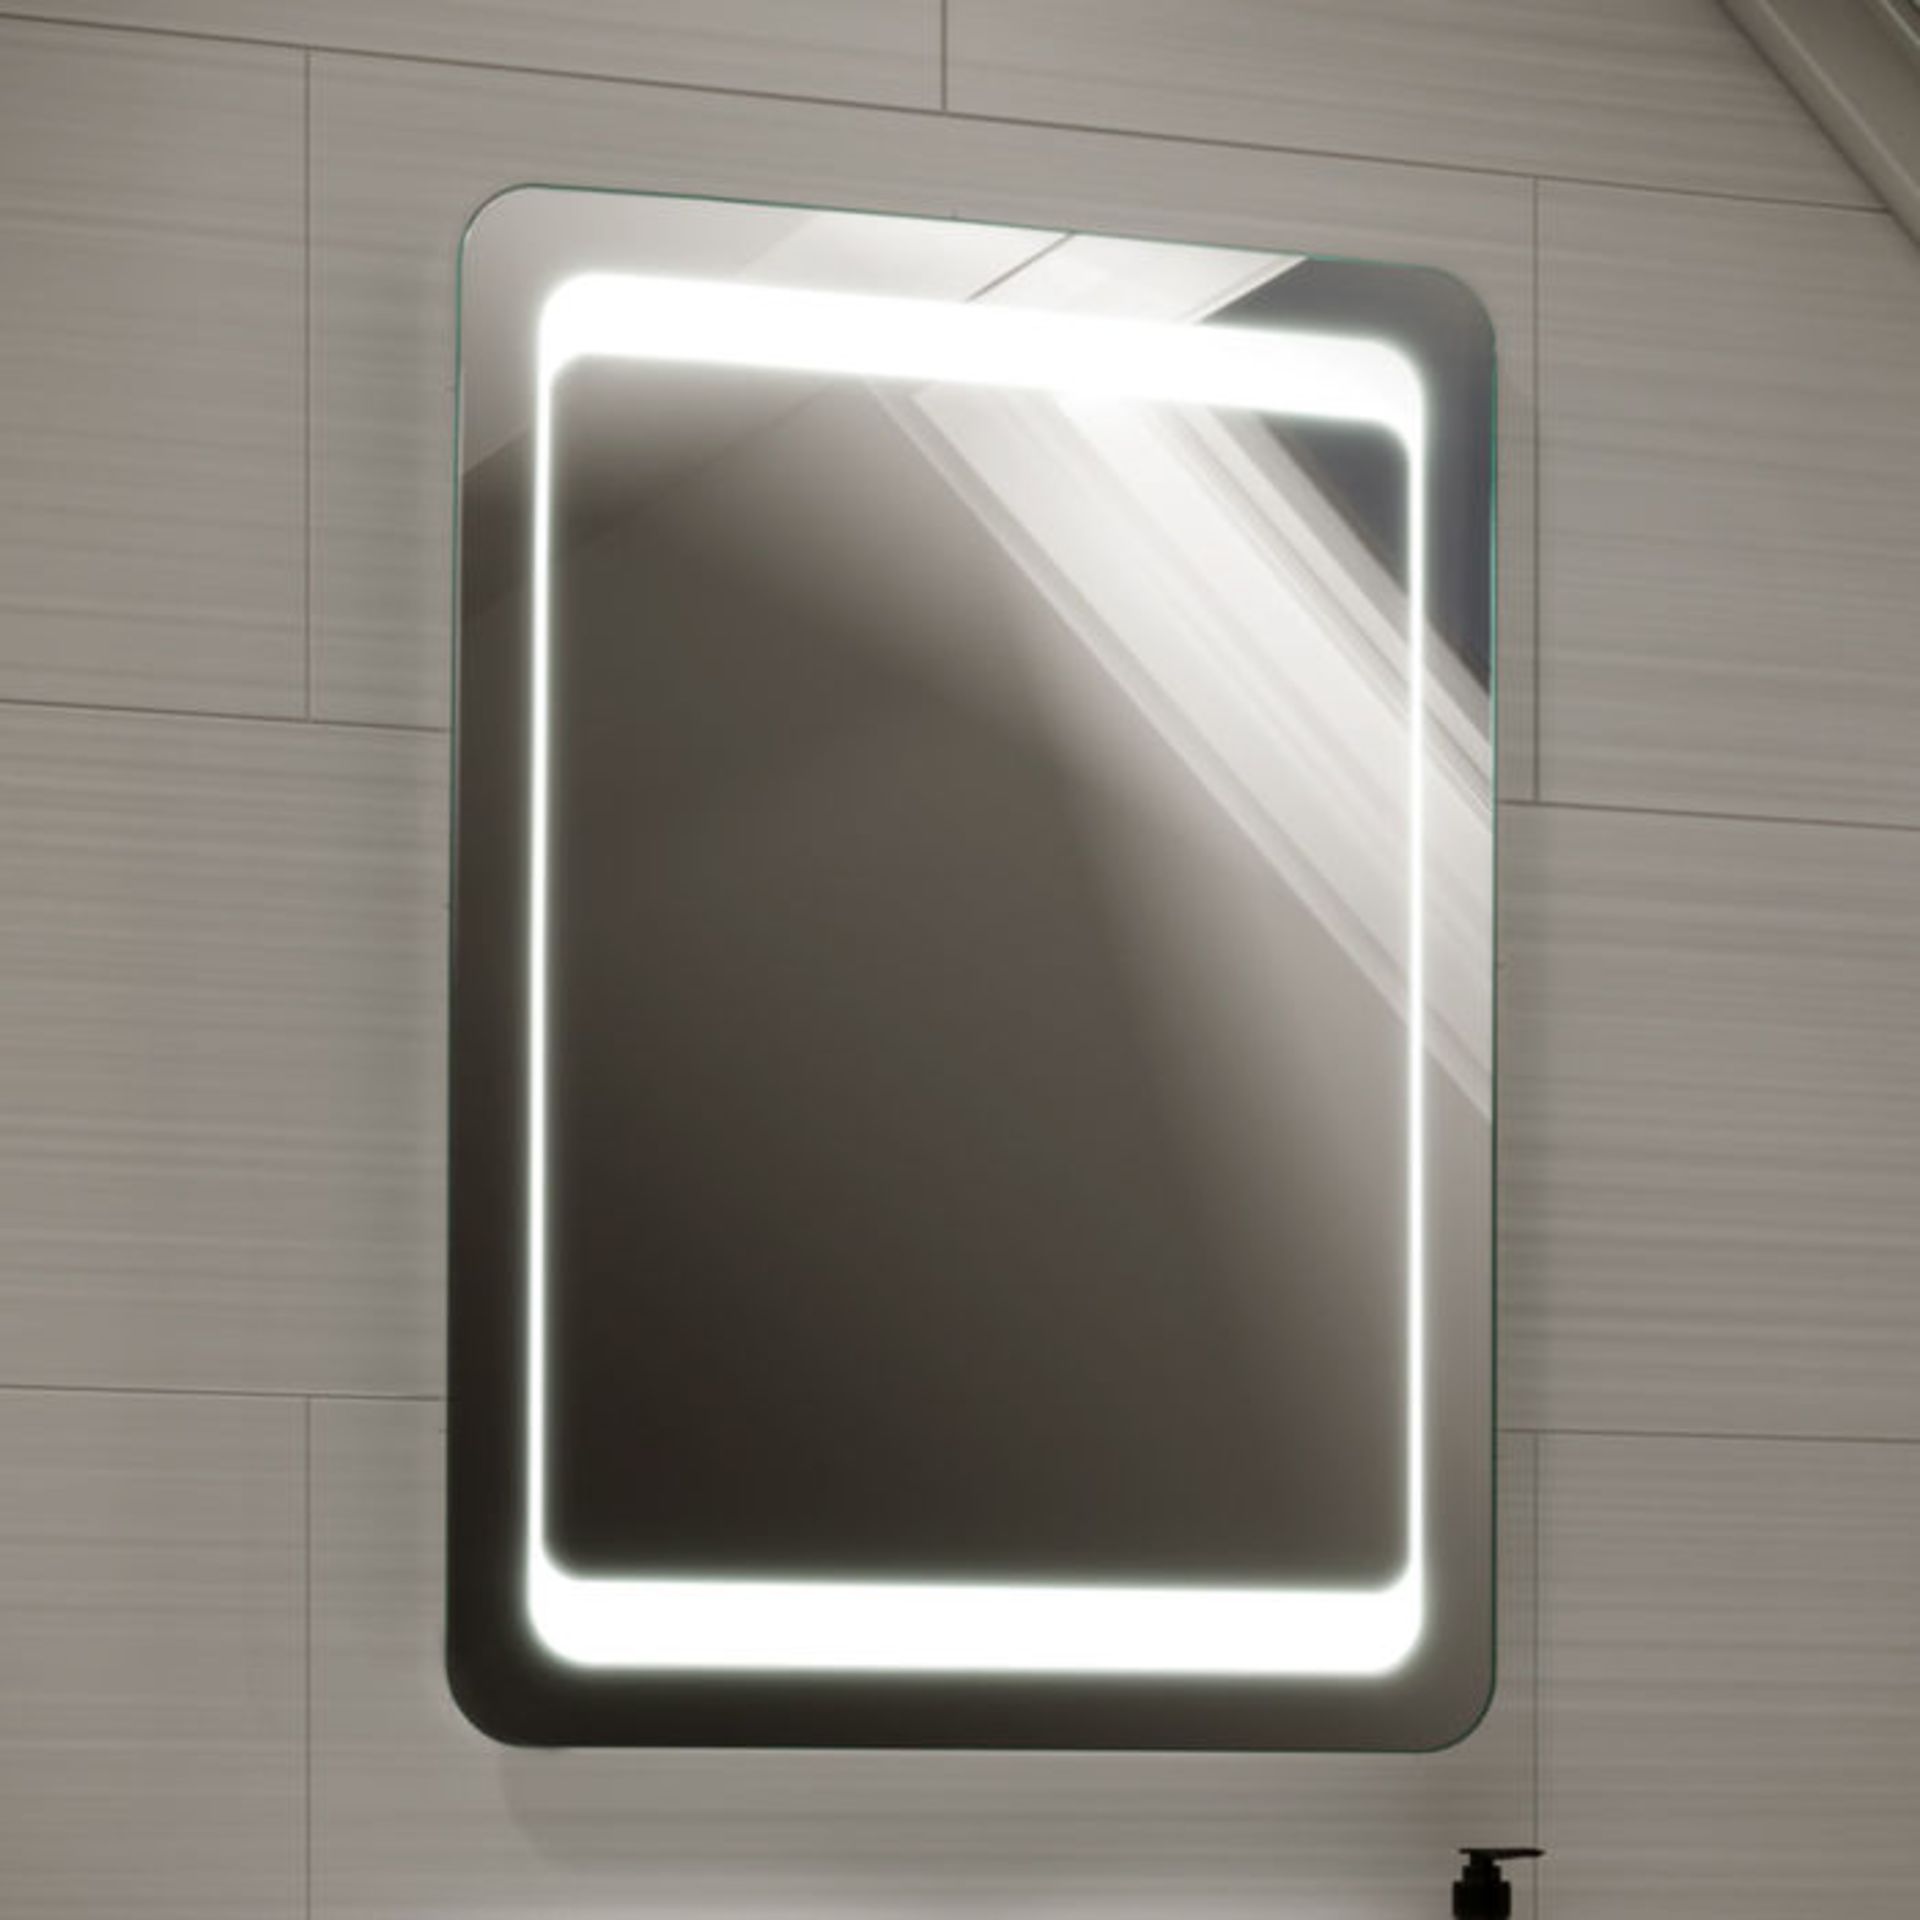 (JM148) 500x700mm Quasar Illuminated LED Mirror. Energy efficient LED lighting with IP44 rating - Image 2 of 4